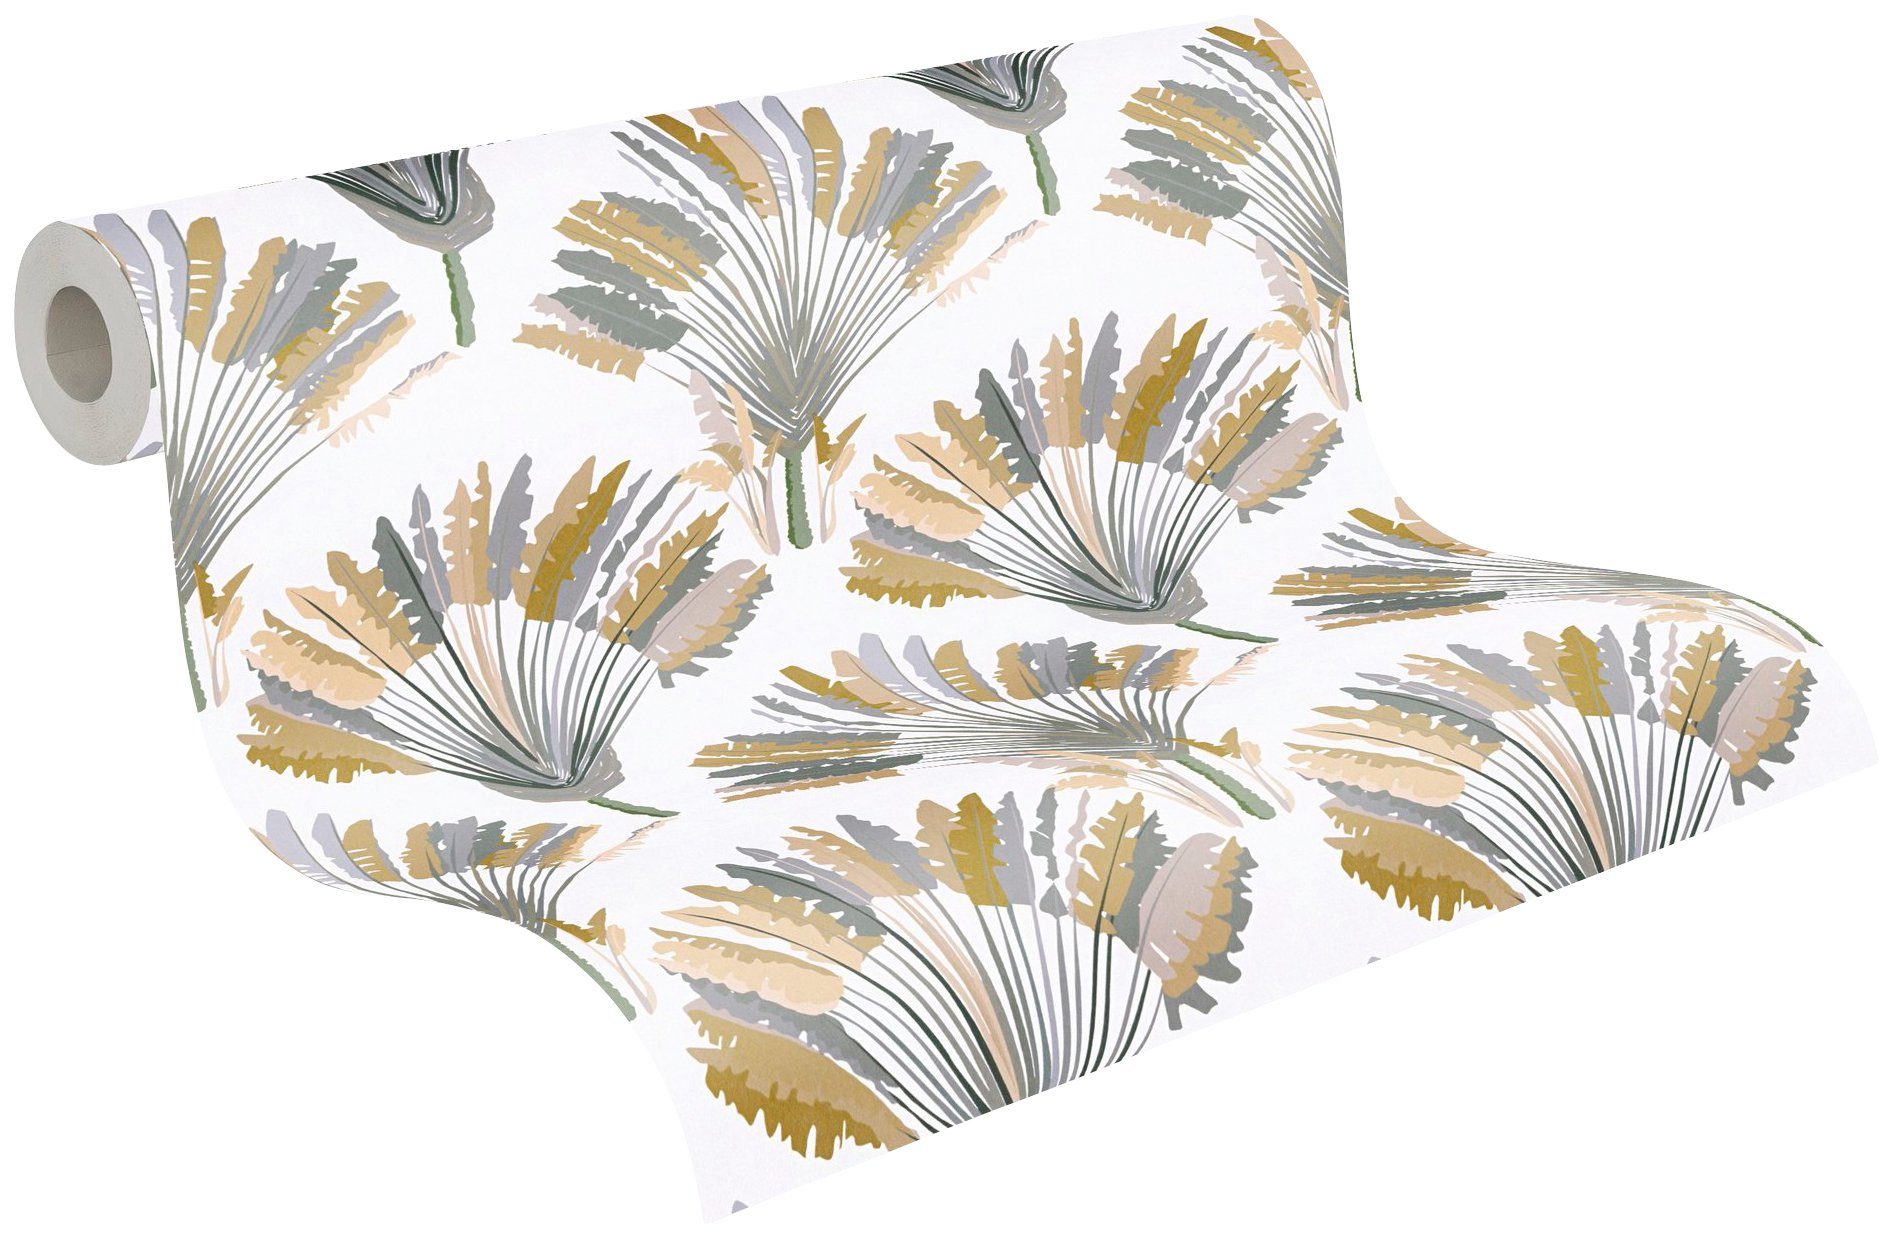 gelb/grau/weiß Palmentapete Architects Paper glatt, Dschungel Vliestapete Création Chic, A.S. botanisch, Tapete Federn floral, Jungle tropisch,